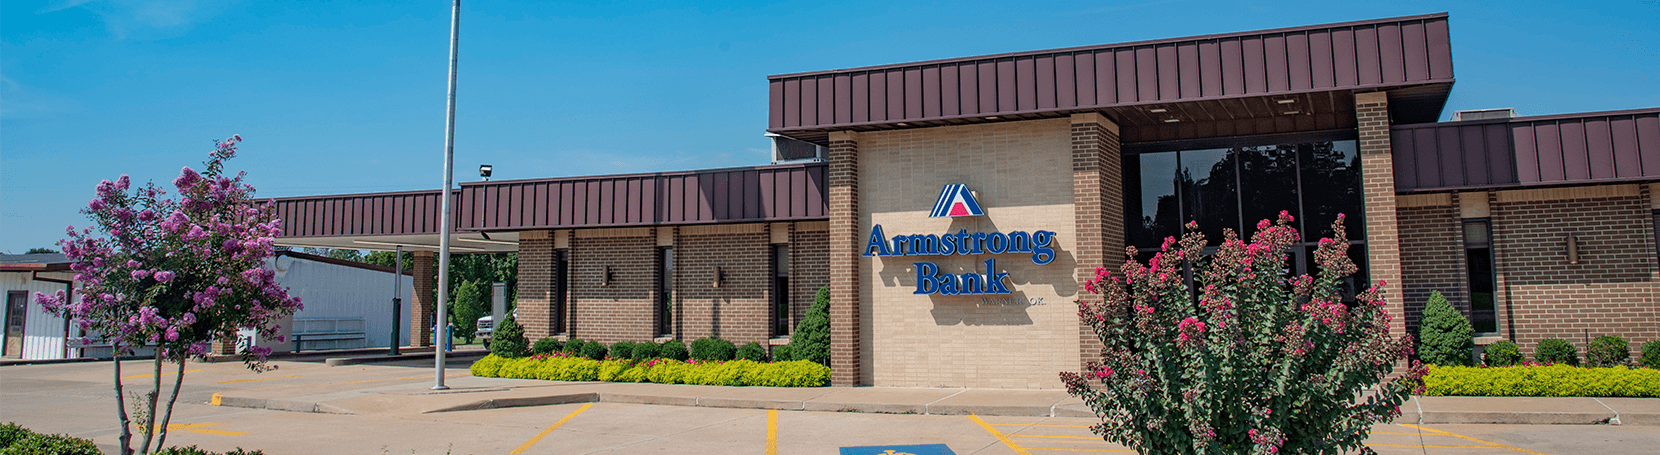 Armstrong Bank building in Warner, Oklahoma